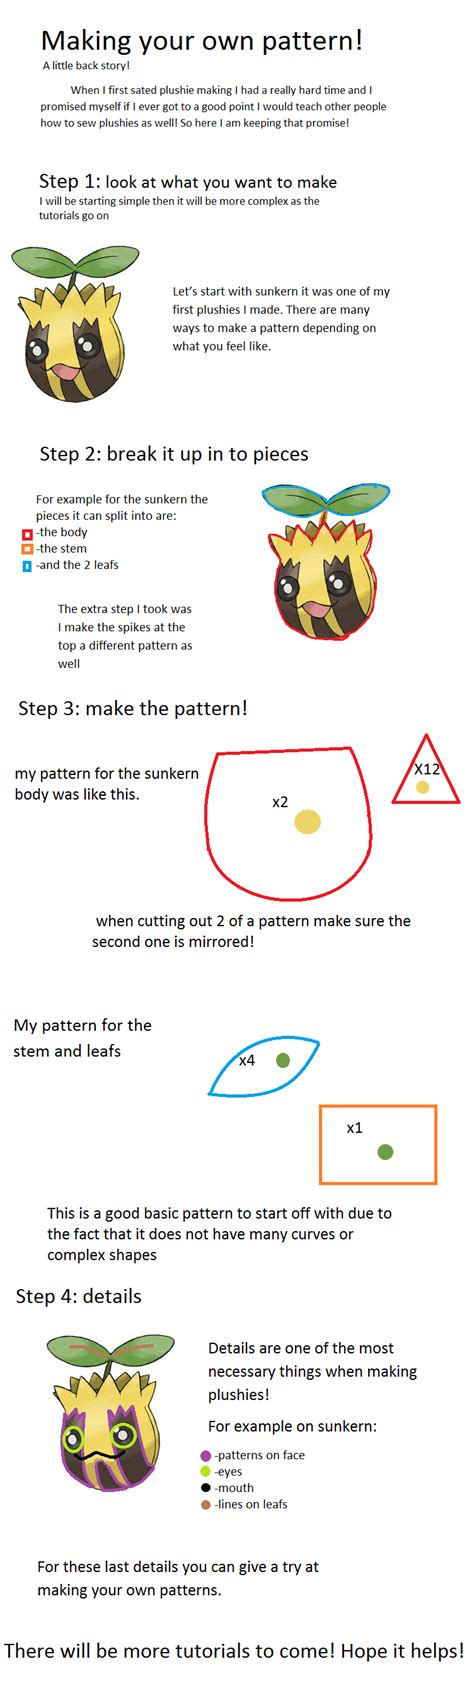 sunkern pattern tutorial by Plush-Lore on deviantART | Plushie patterns, Plush pattern, Pattern